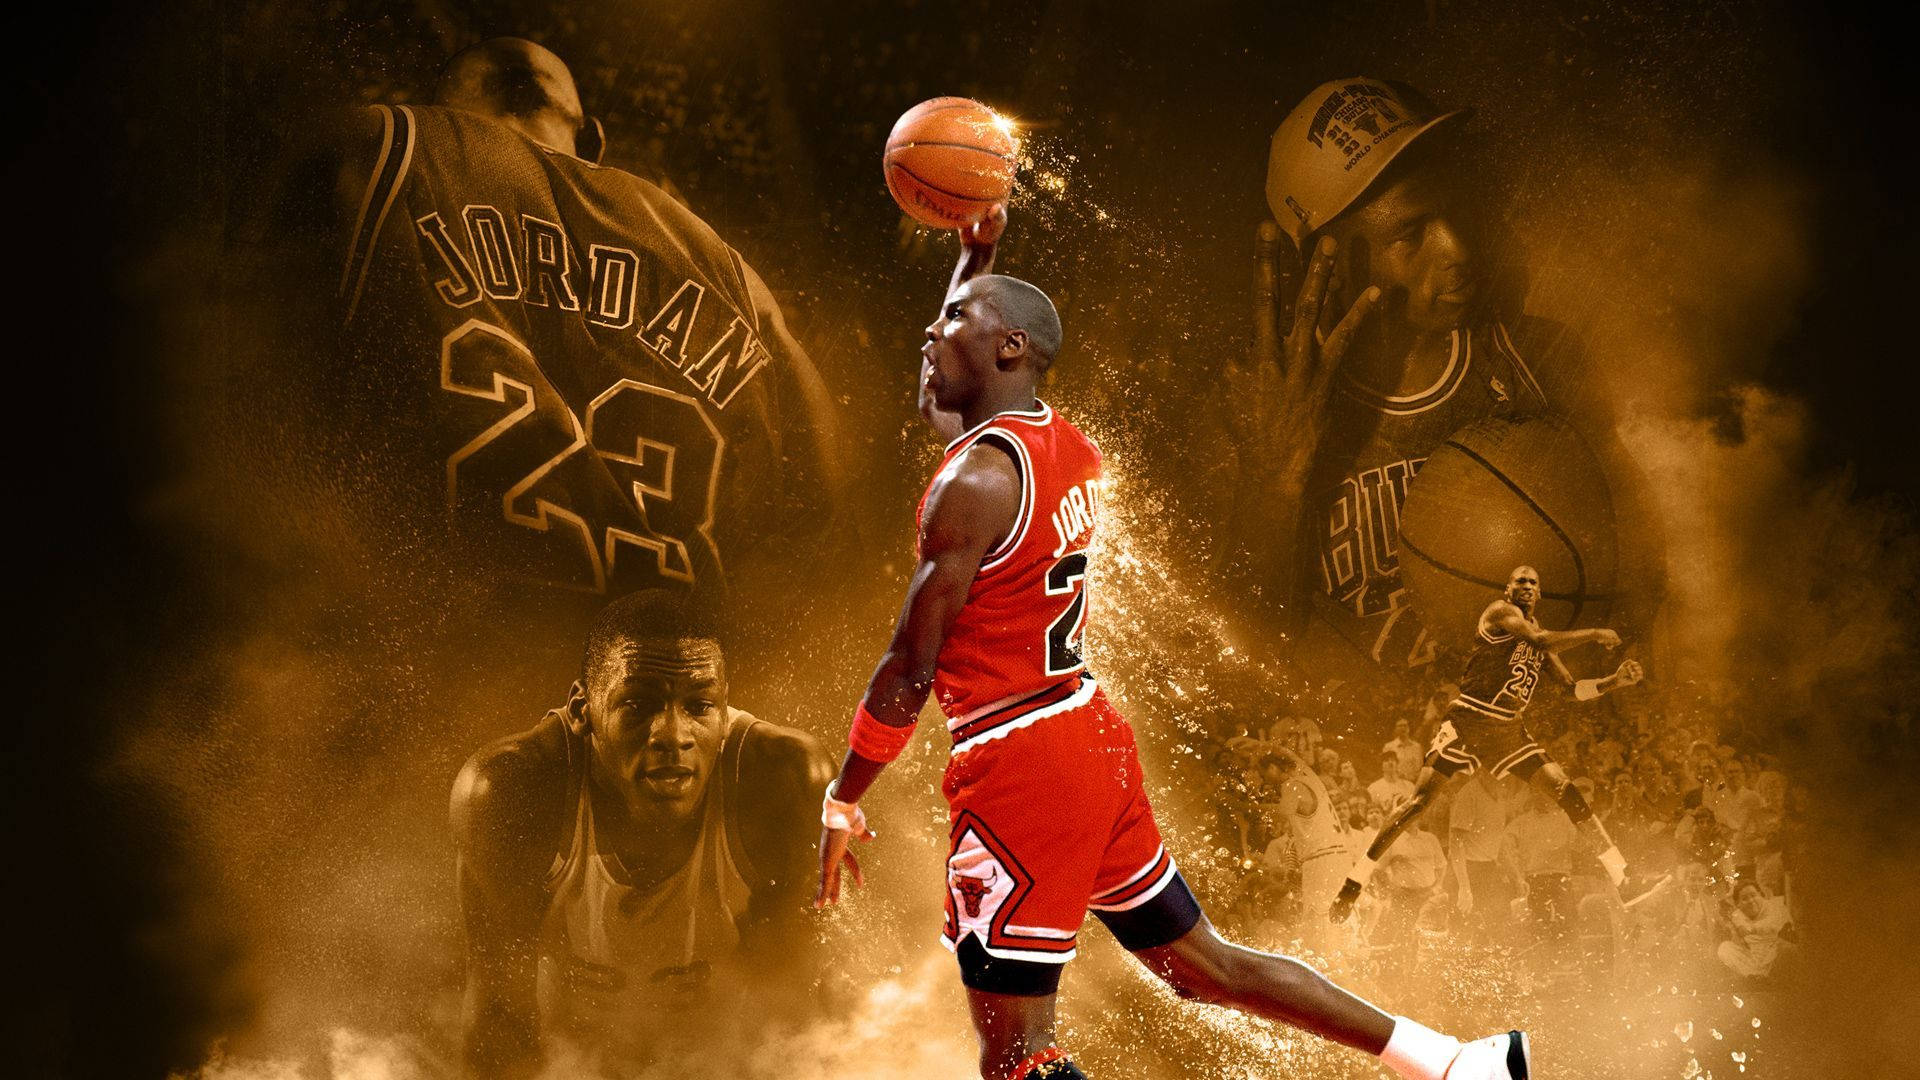 Michael Jordan 1920X1080 Wallpaper and Background Image